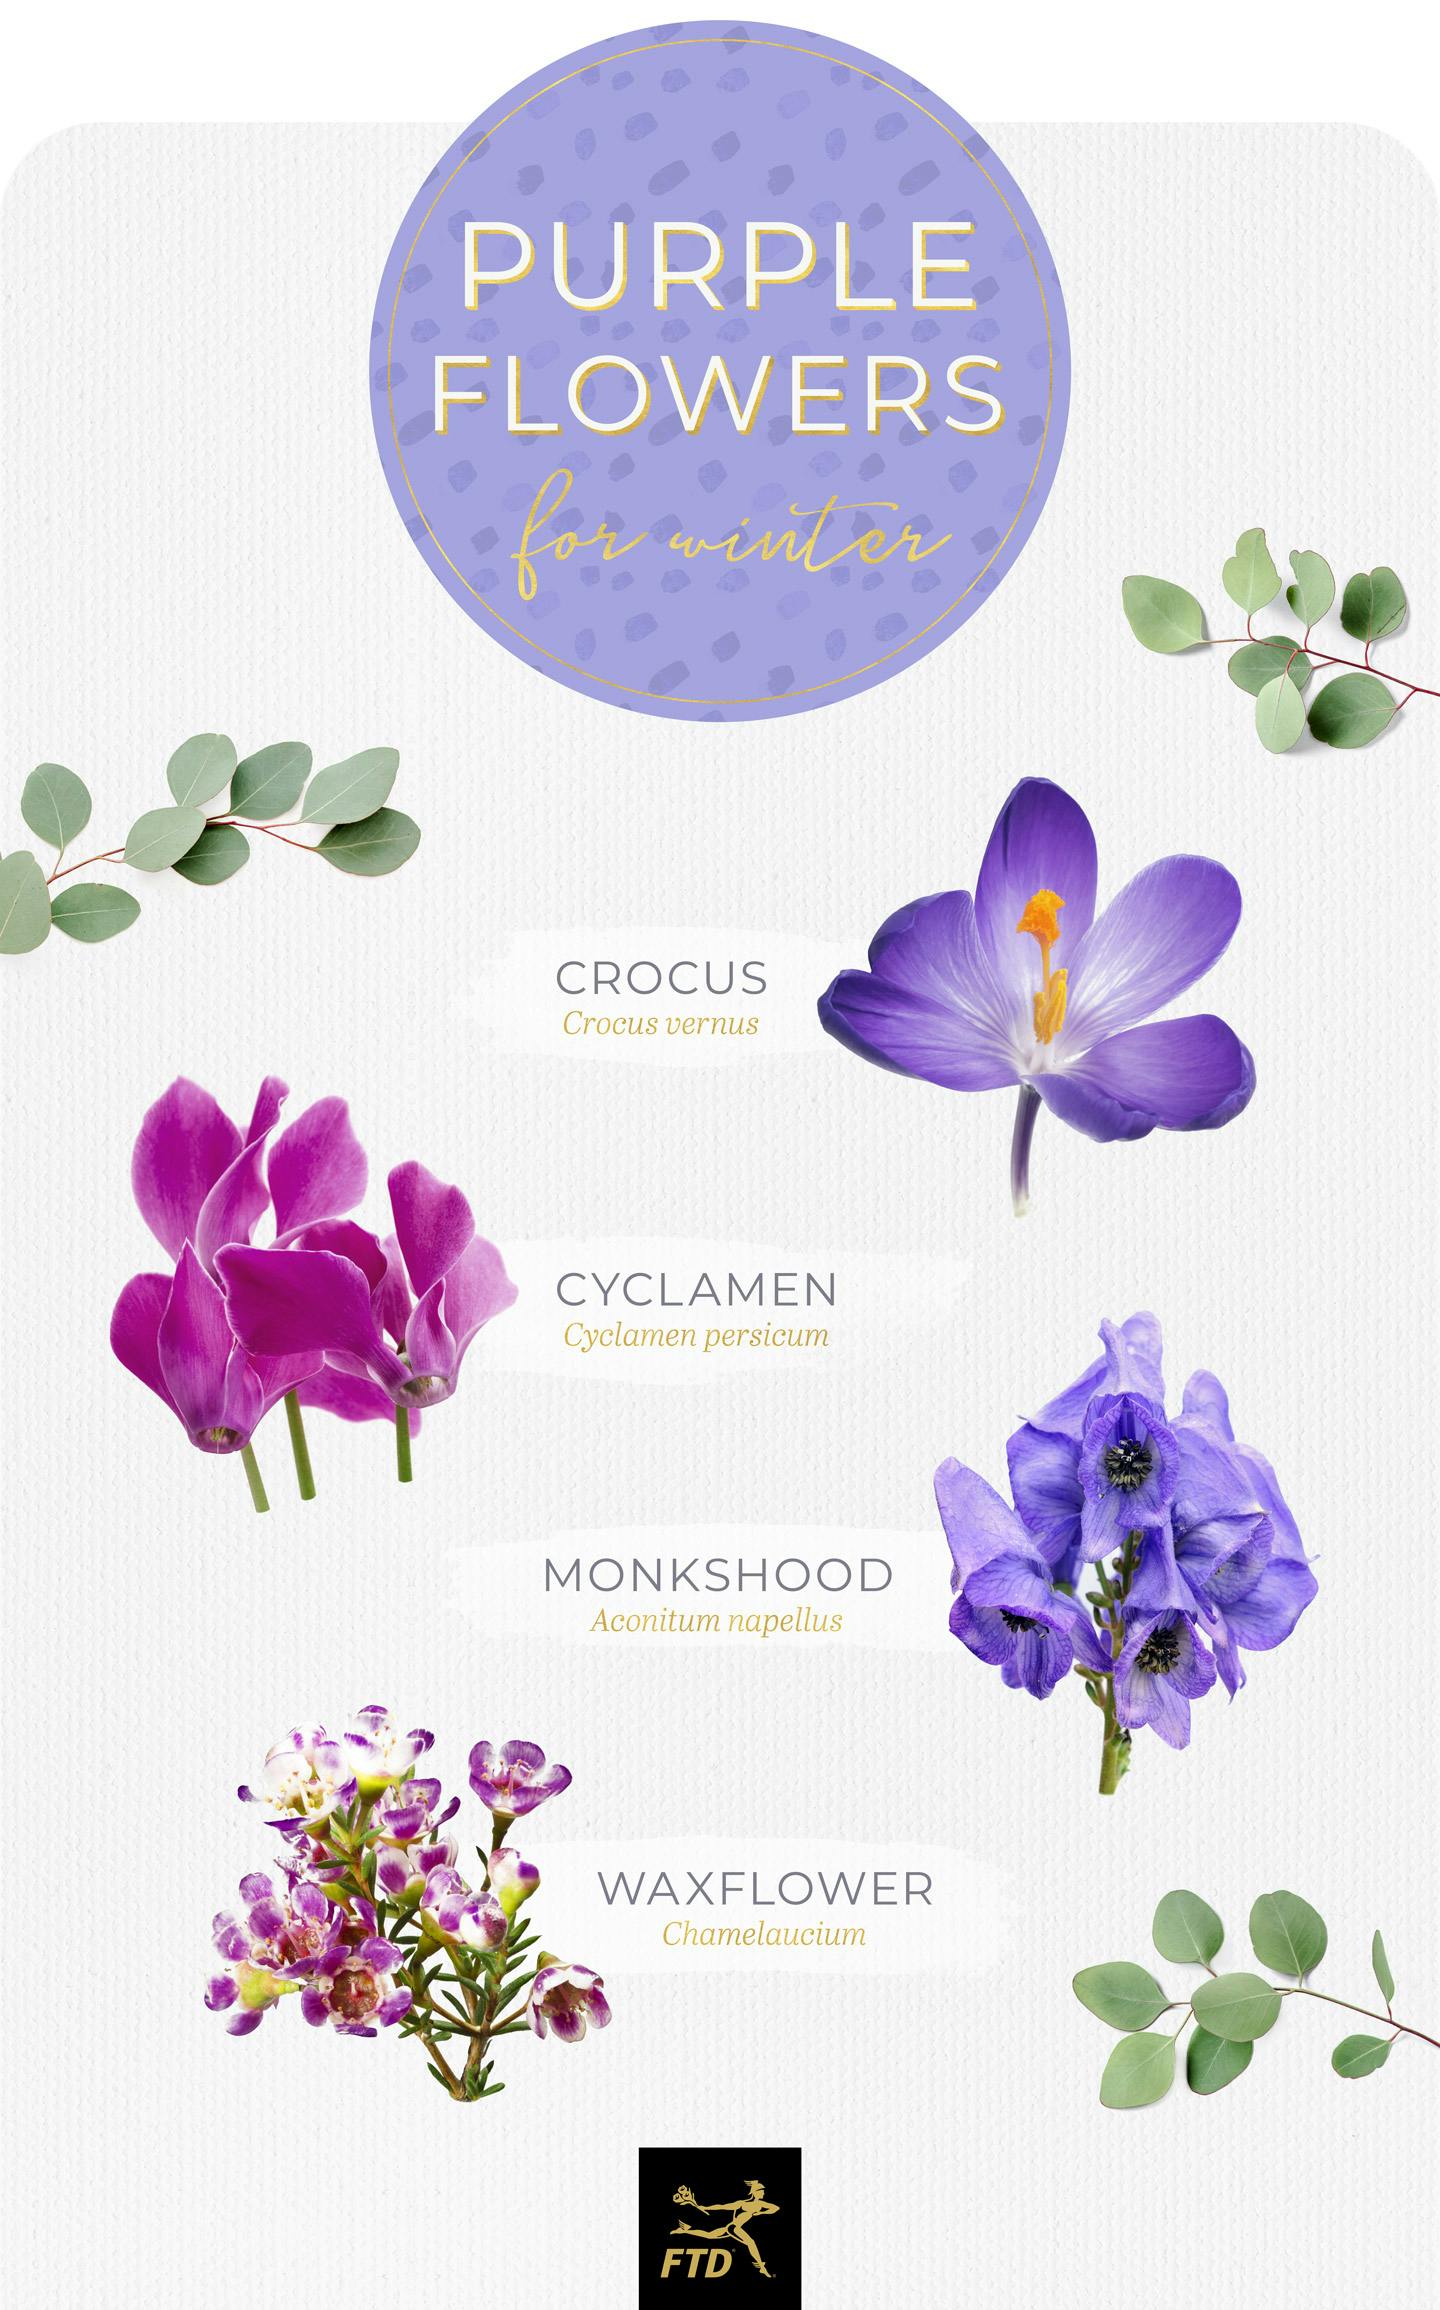 50 Types of Purple Flowers